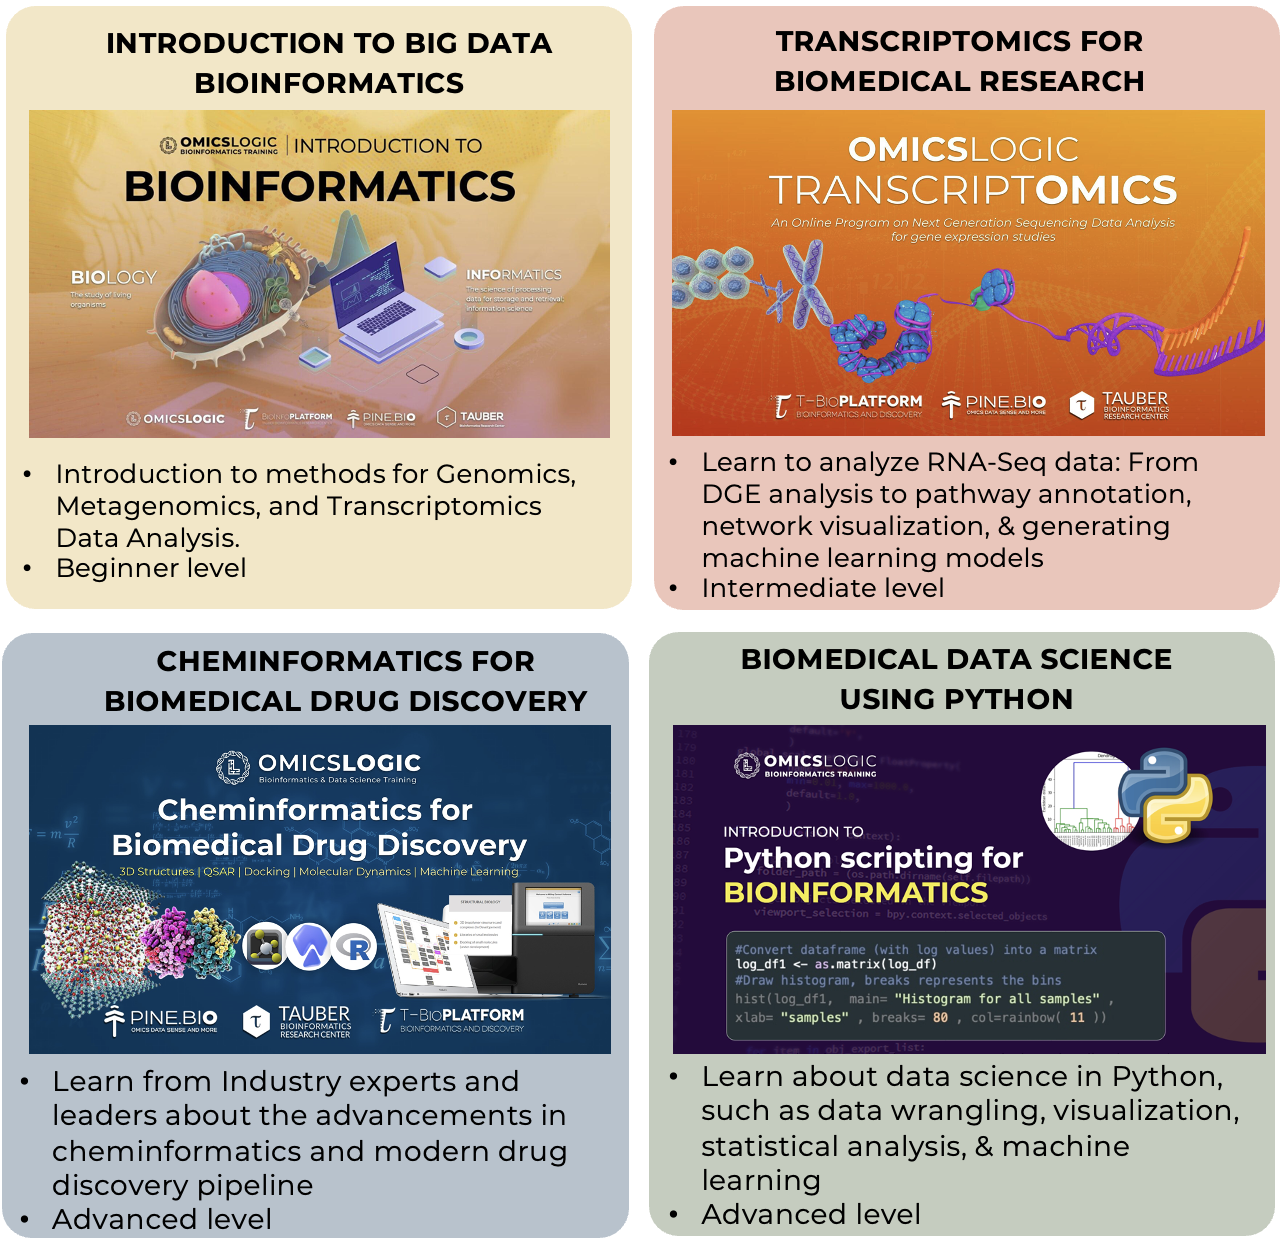 Big Data Bioinformatics & Data Science Training for LBRN students